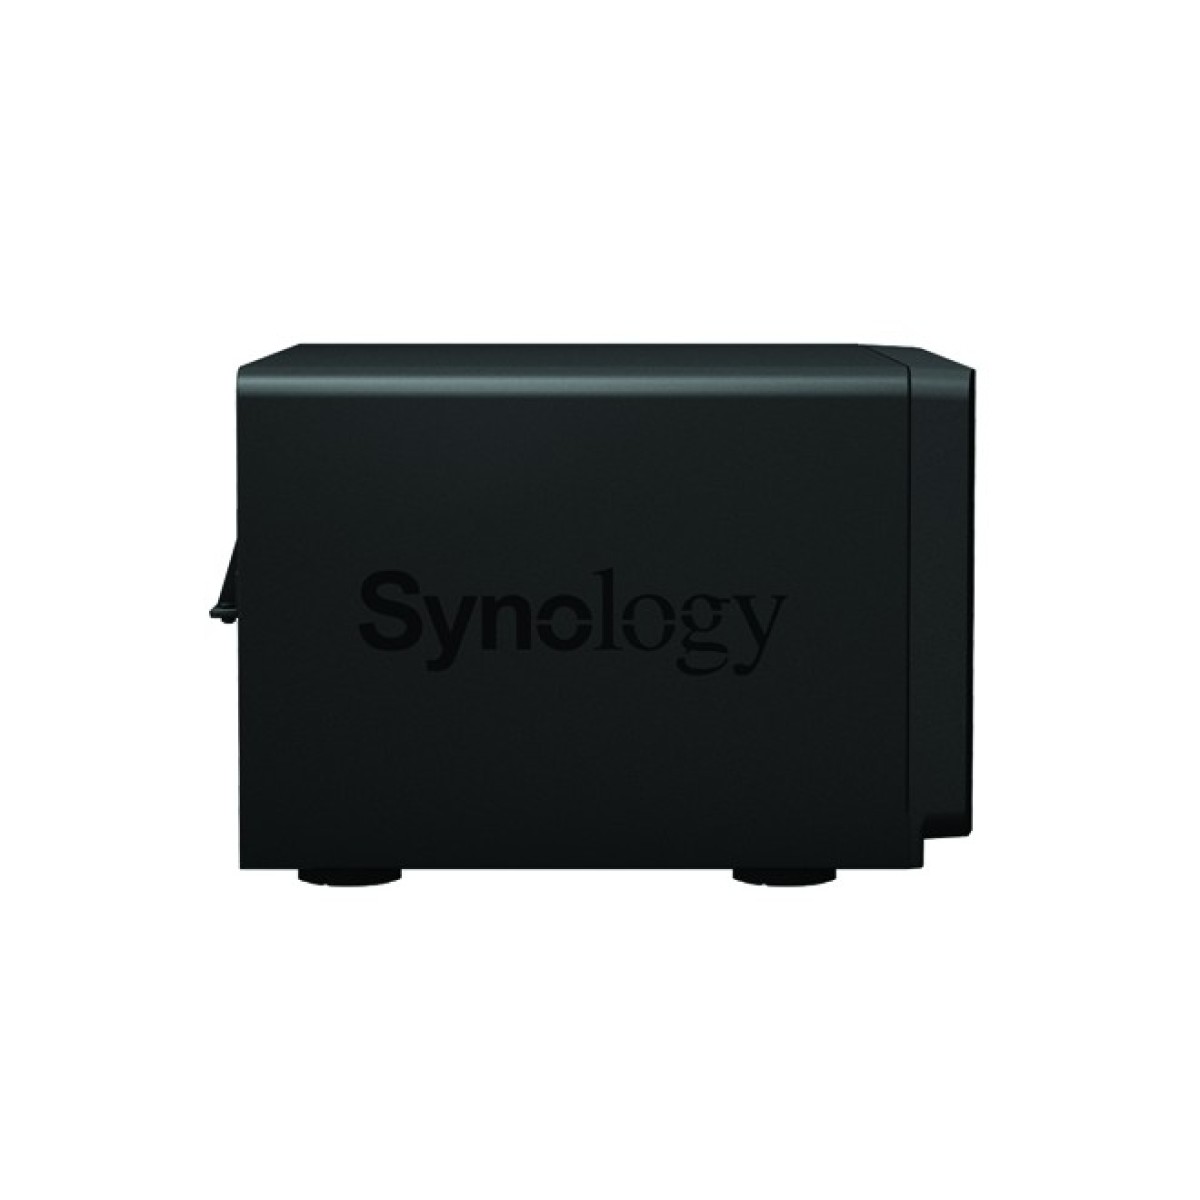 Сетевое хранилище Synology DS1618+ - фото 3